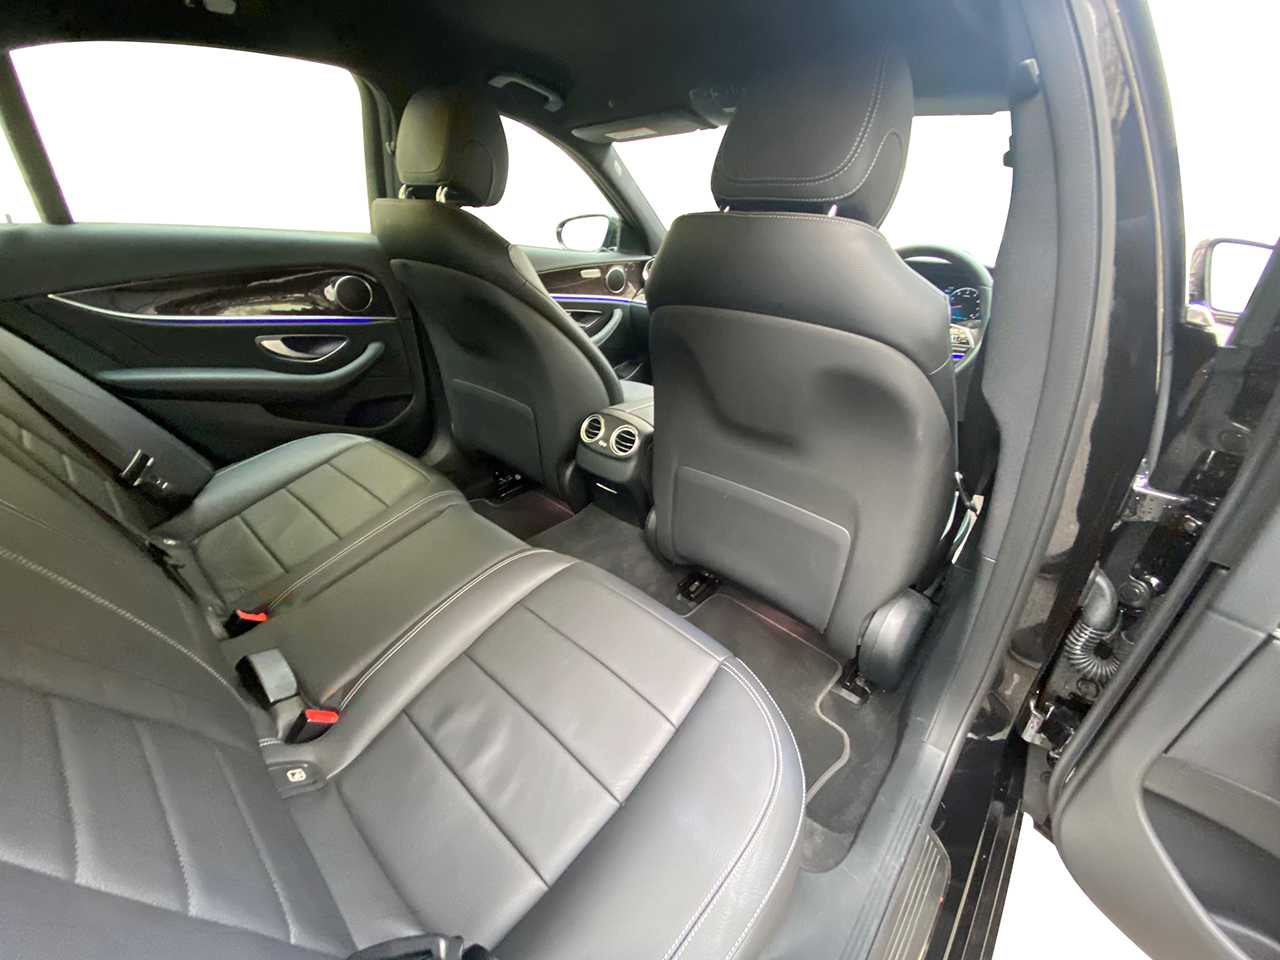 Mercedes benz E-Class back seats view 2